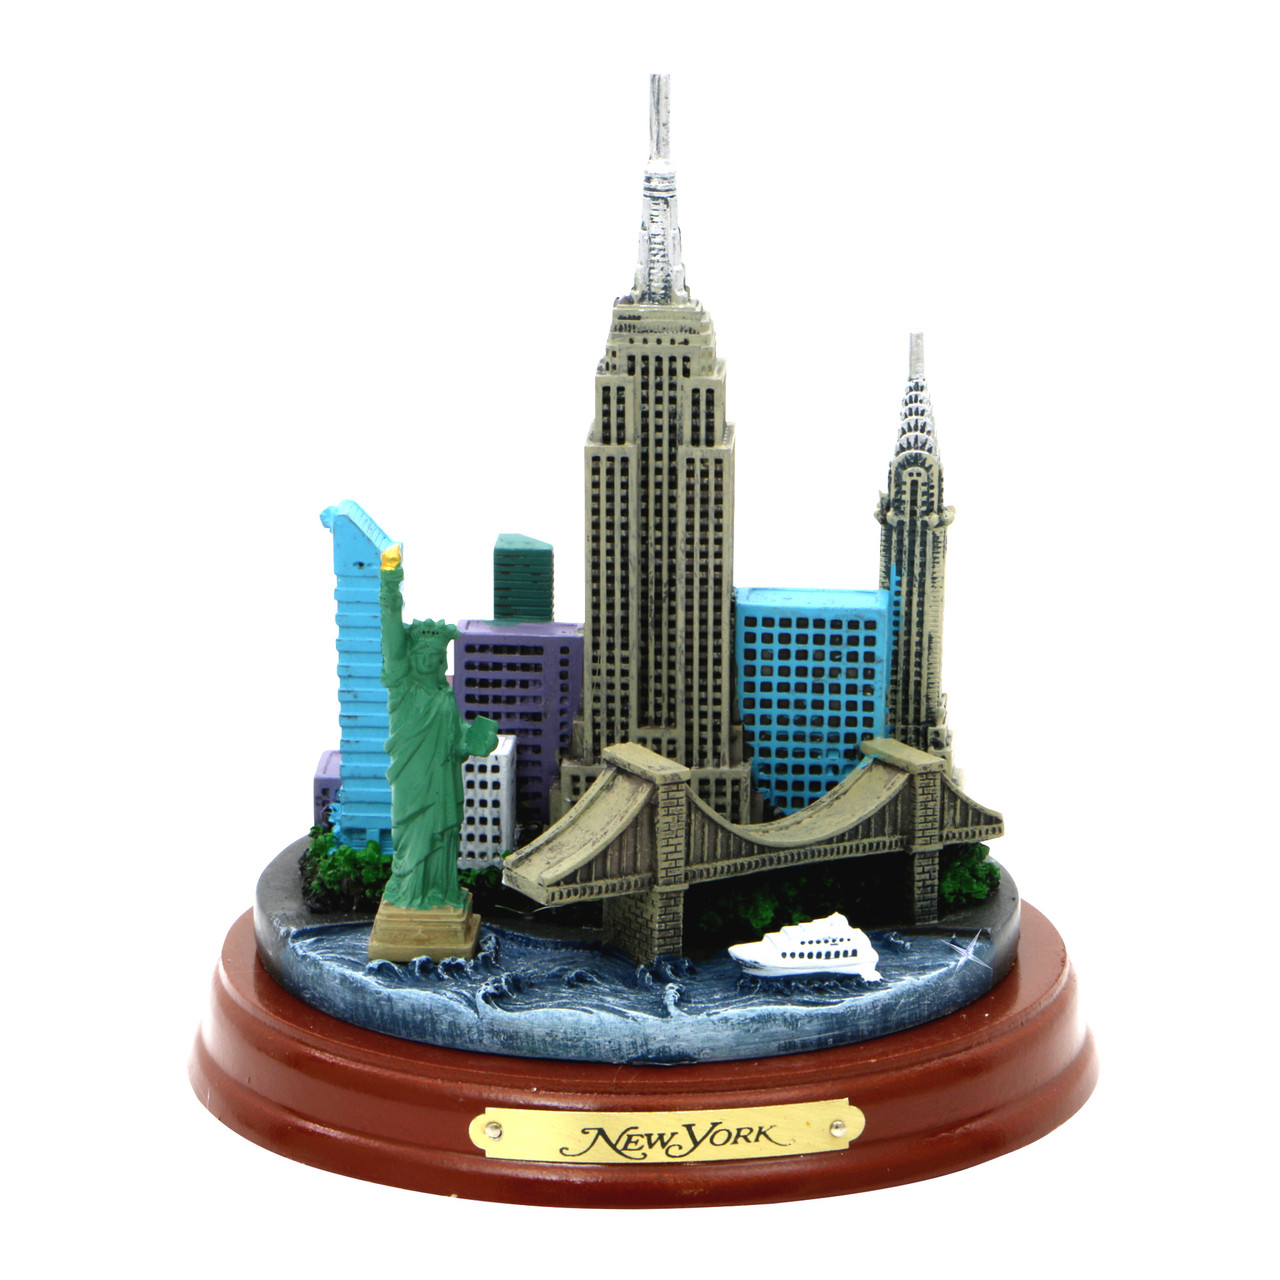 New York Souvenir Metal Plate with Statue of Liberty Manhattan Empire State Building Brooklyn Bridge